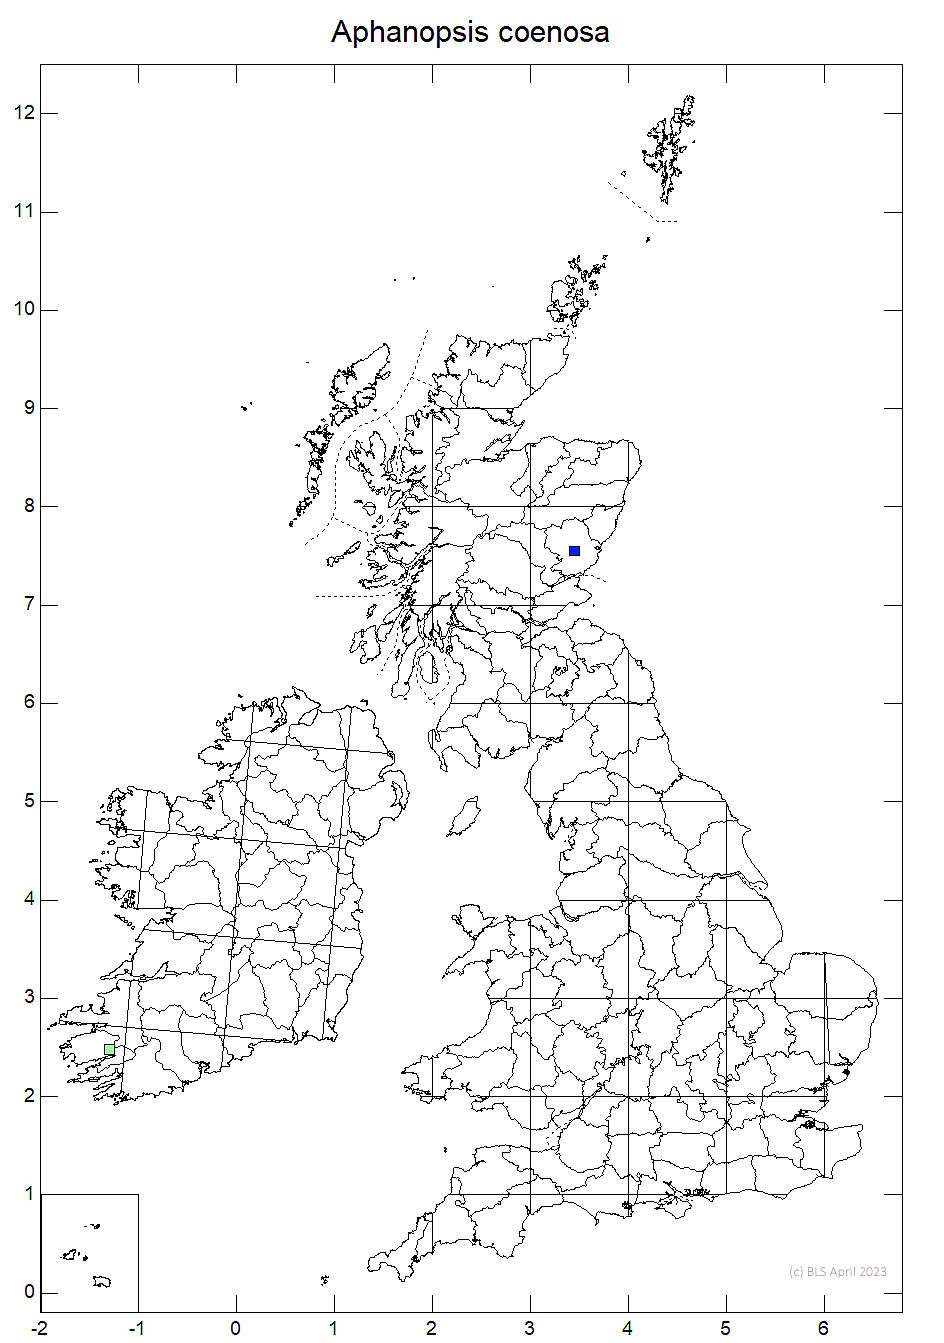 Aphanopsis coenosa 10km sq distribution map